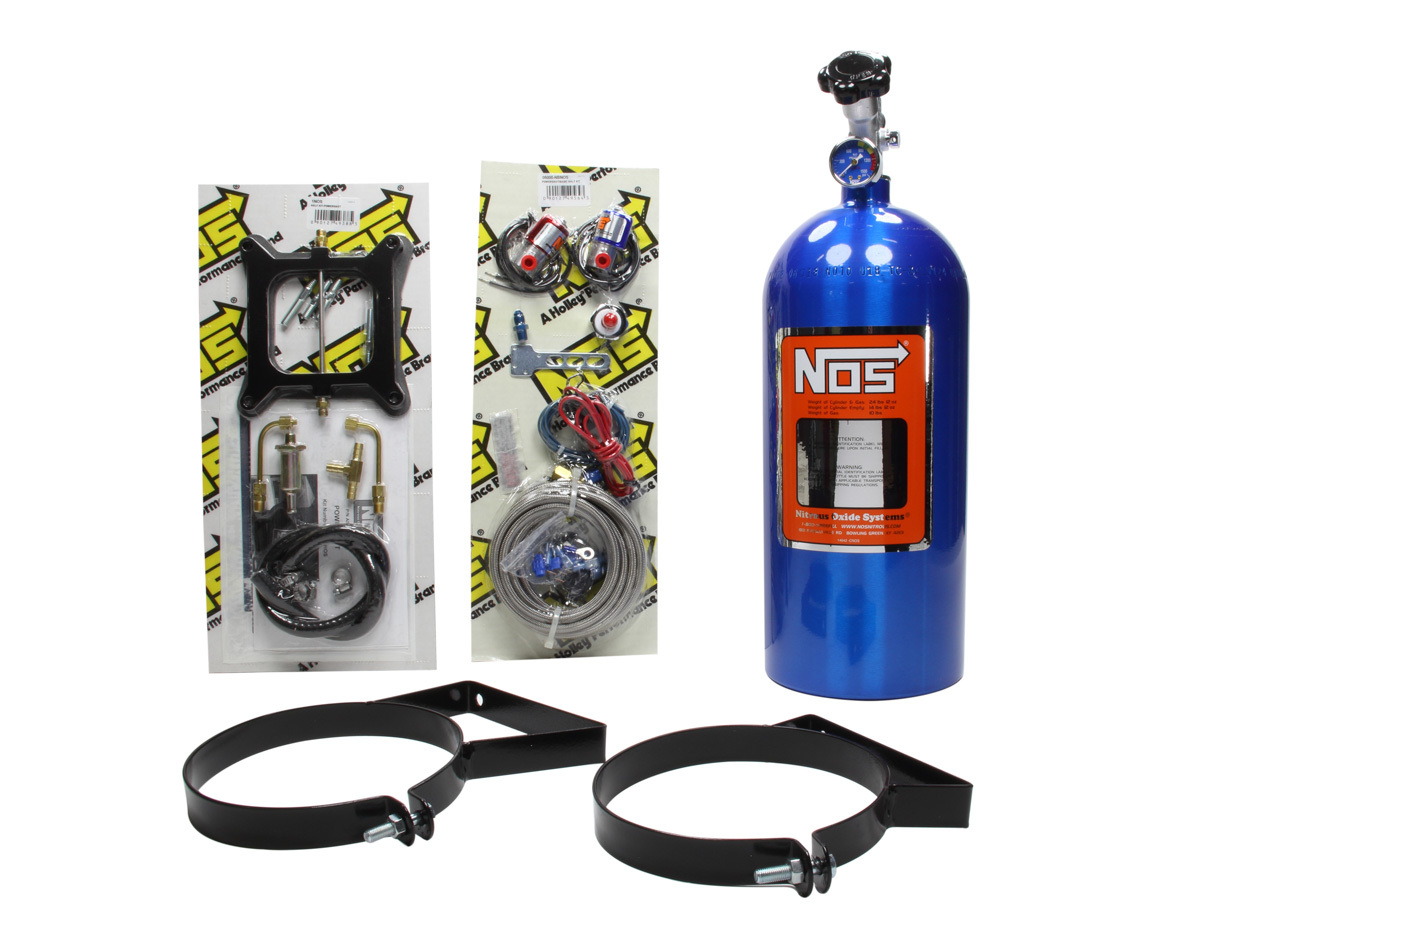 NOS 05001 Nitrous Oxide System, Powershot, Wet, Single Stage, 150 HP Max, 10 lb Bottle, Blue, Square Bore, Kit